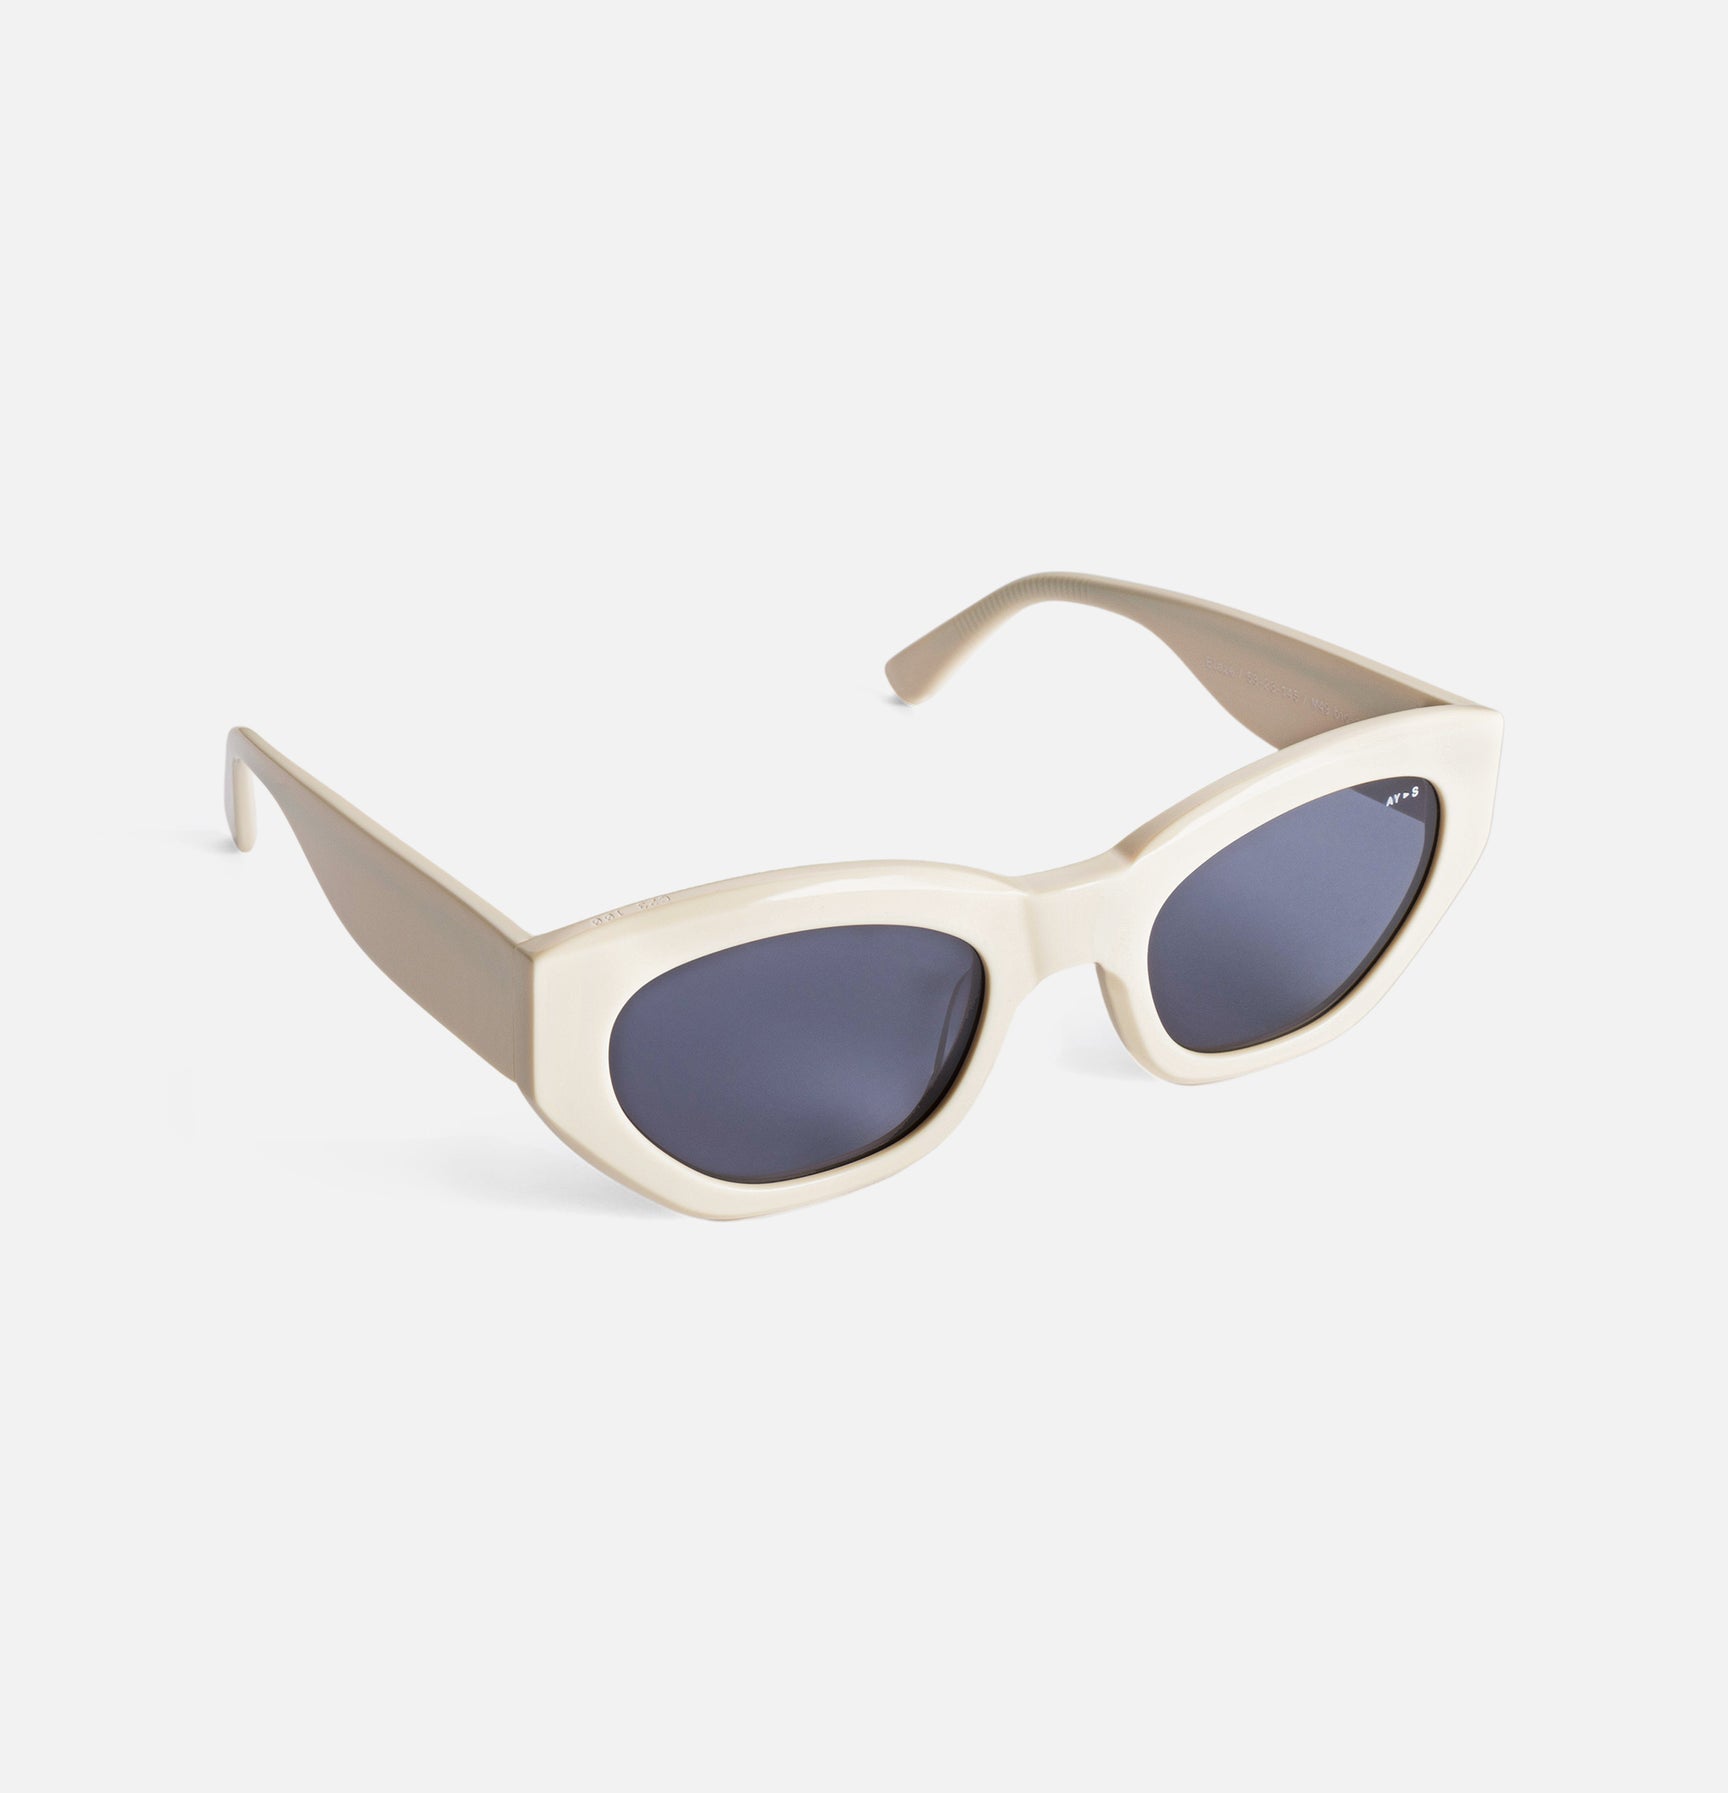 James Ay - Blaze Sunglasses - Solid Ivory